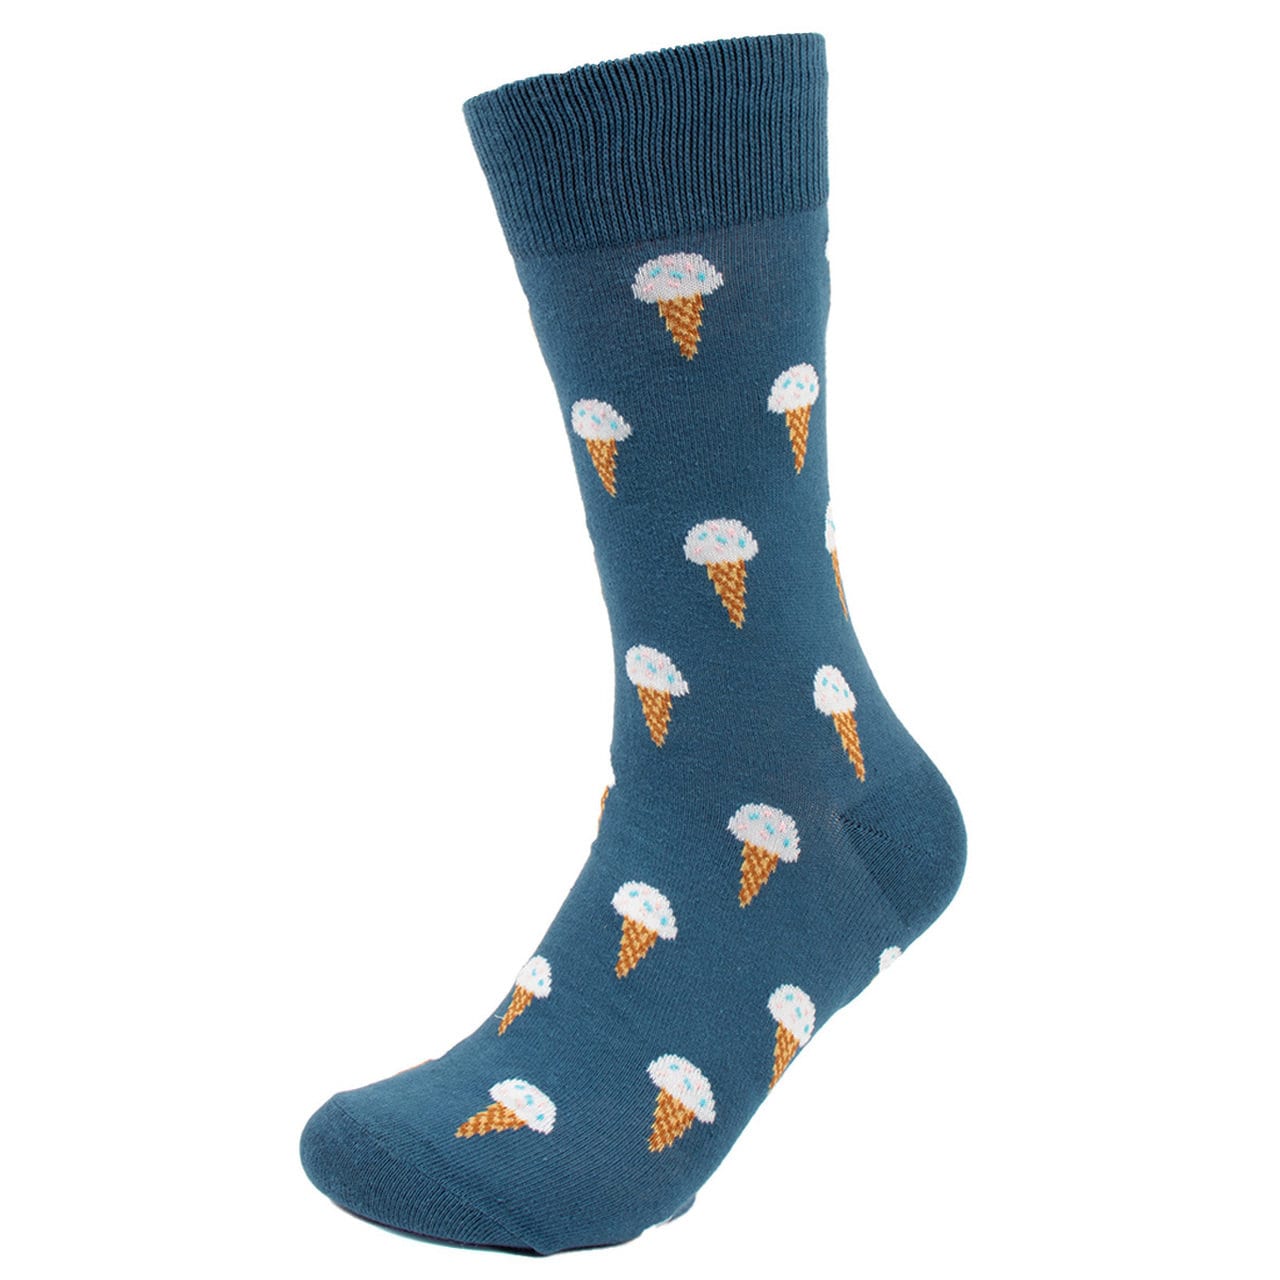 Fun Socks Men's Ice cream Novelty Socks sold by Brian Mcmahon, SKU  38625220